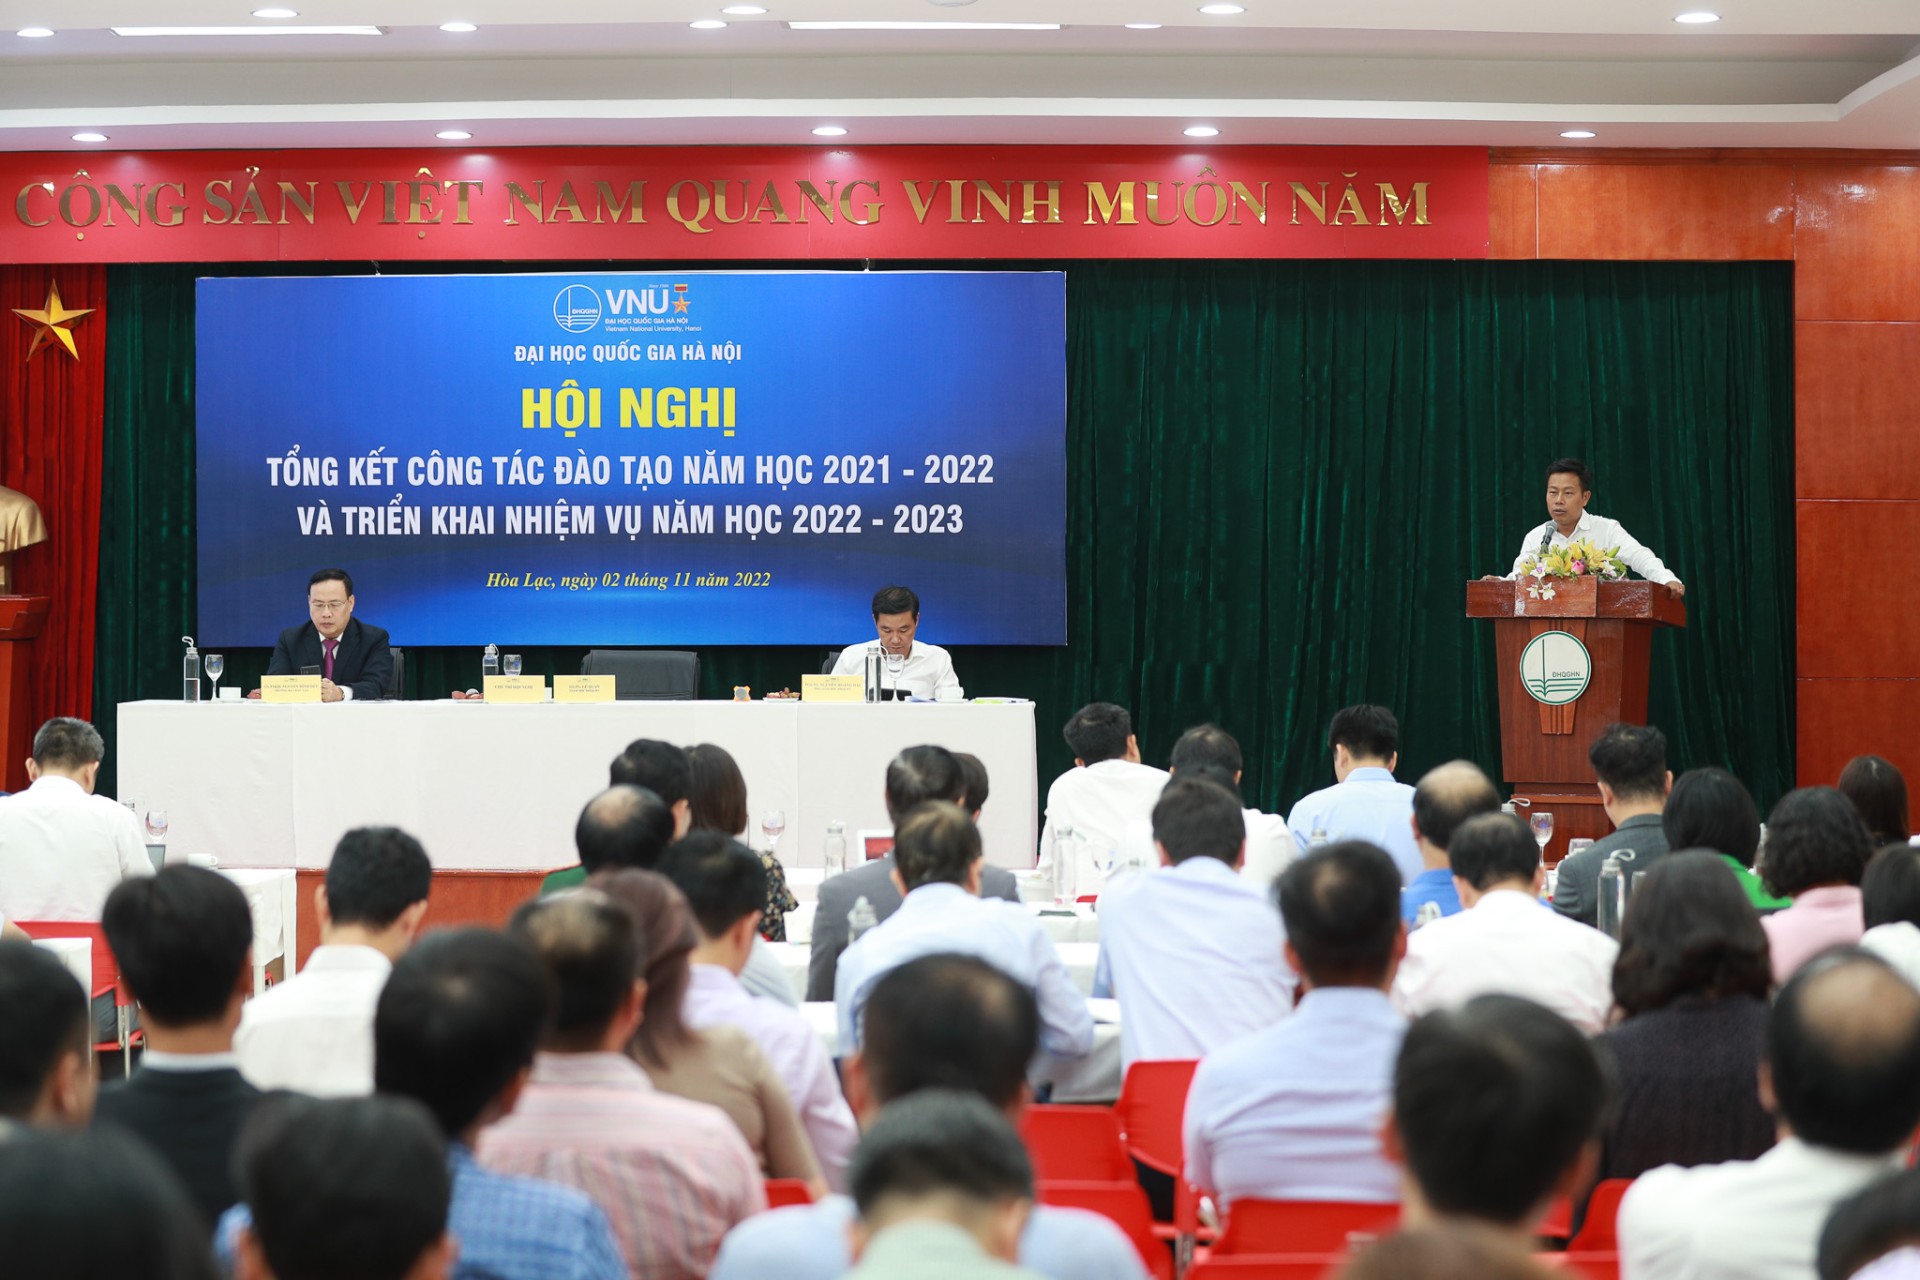 VNU Hoi nghi Tong ket cong tac Dao tao 2021 2022 (34)